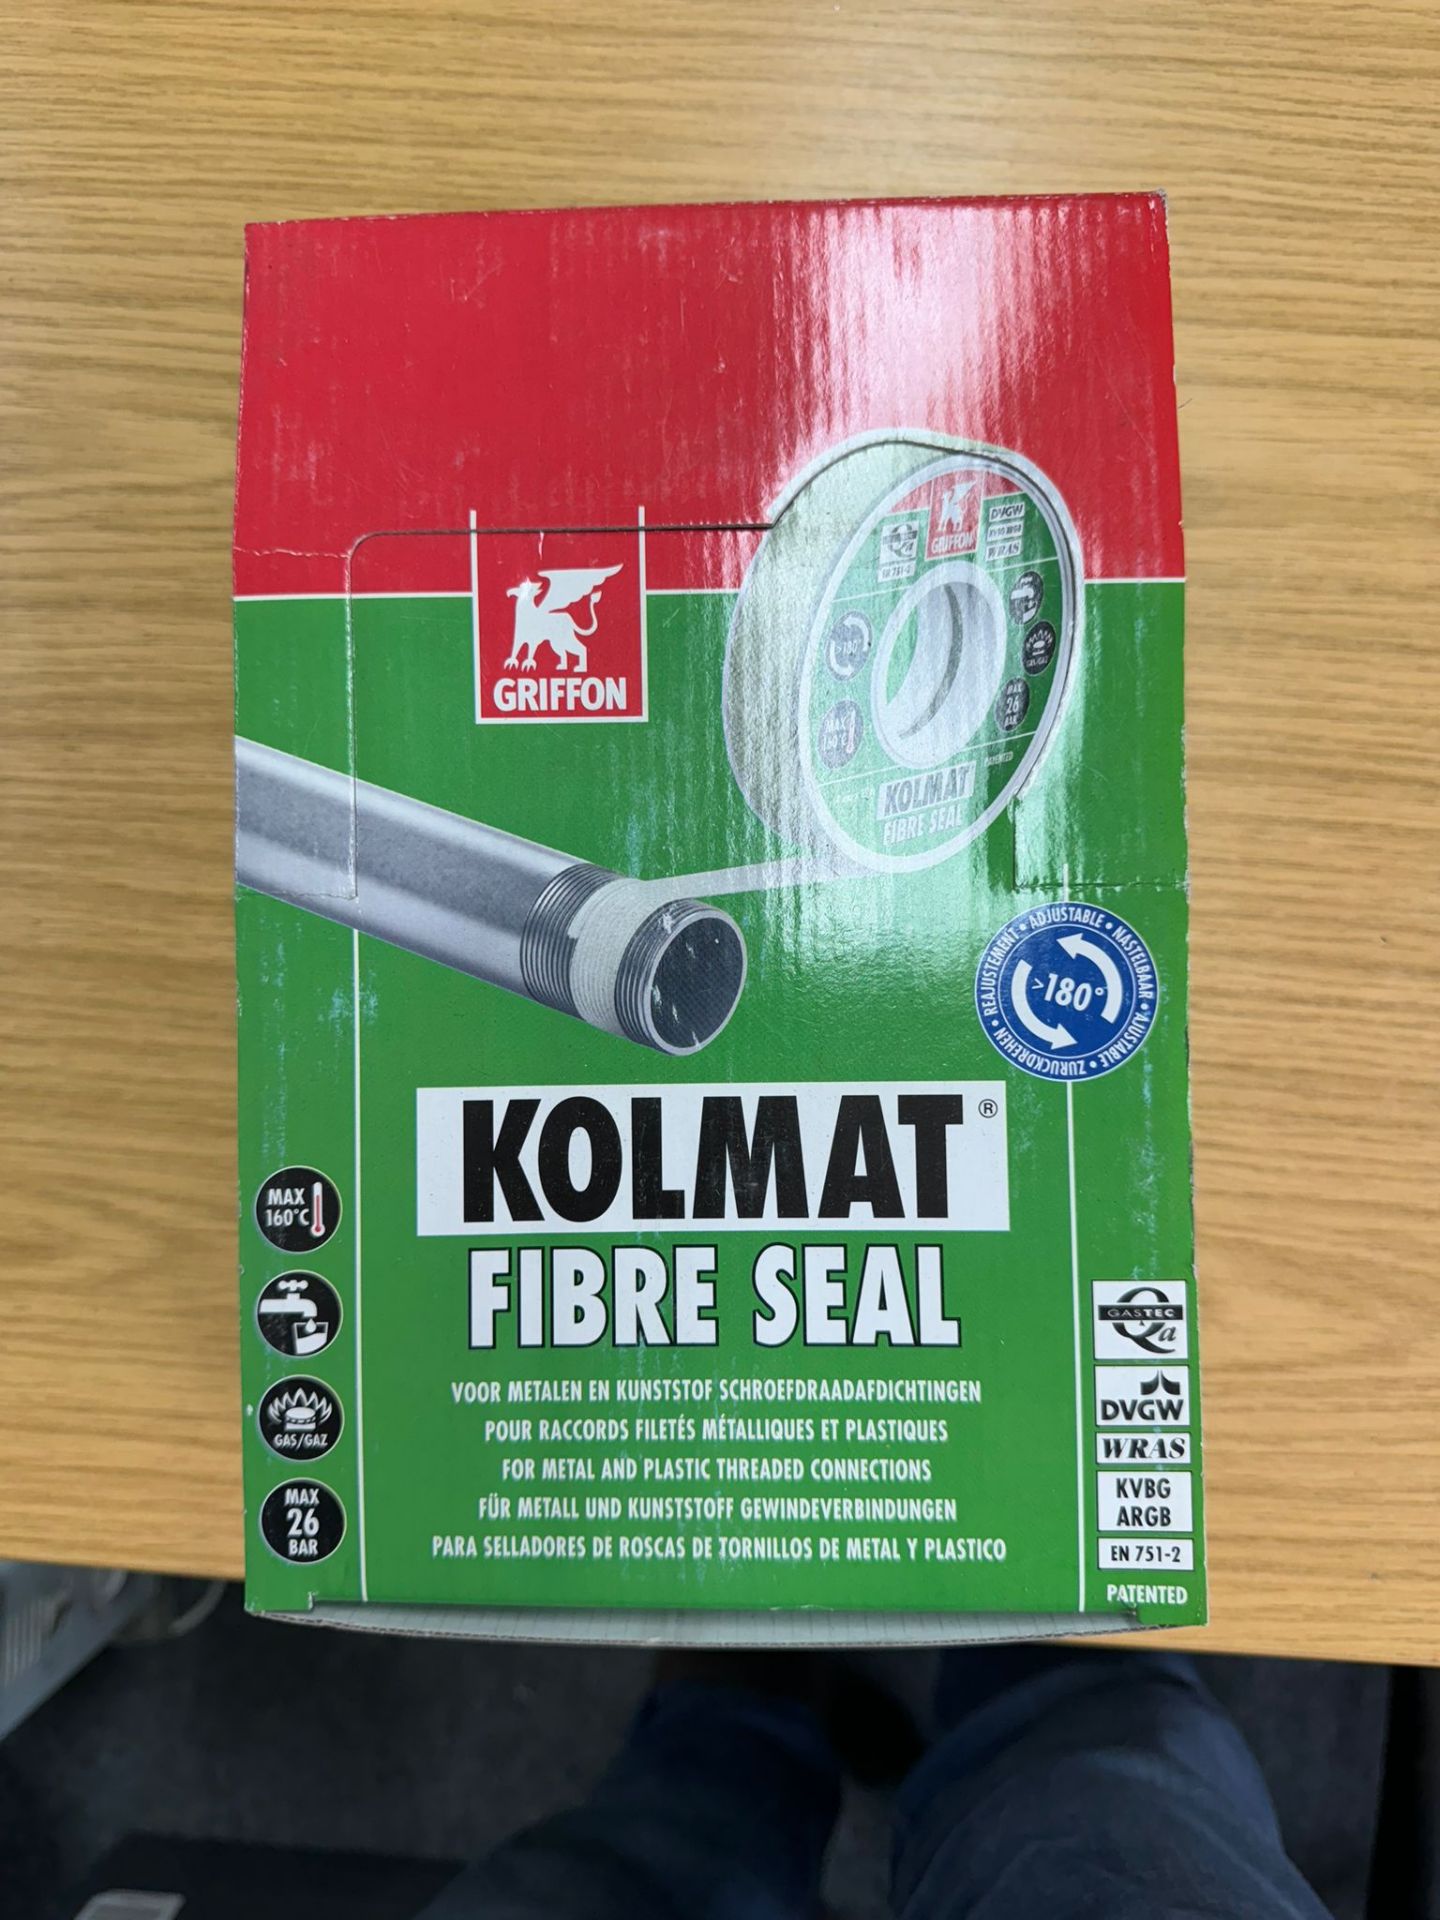 Box kolmat fibre seal contains 30 rolls - Image 3 of 6